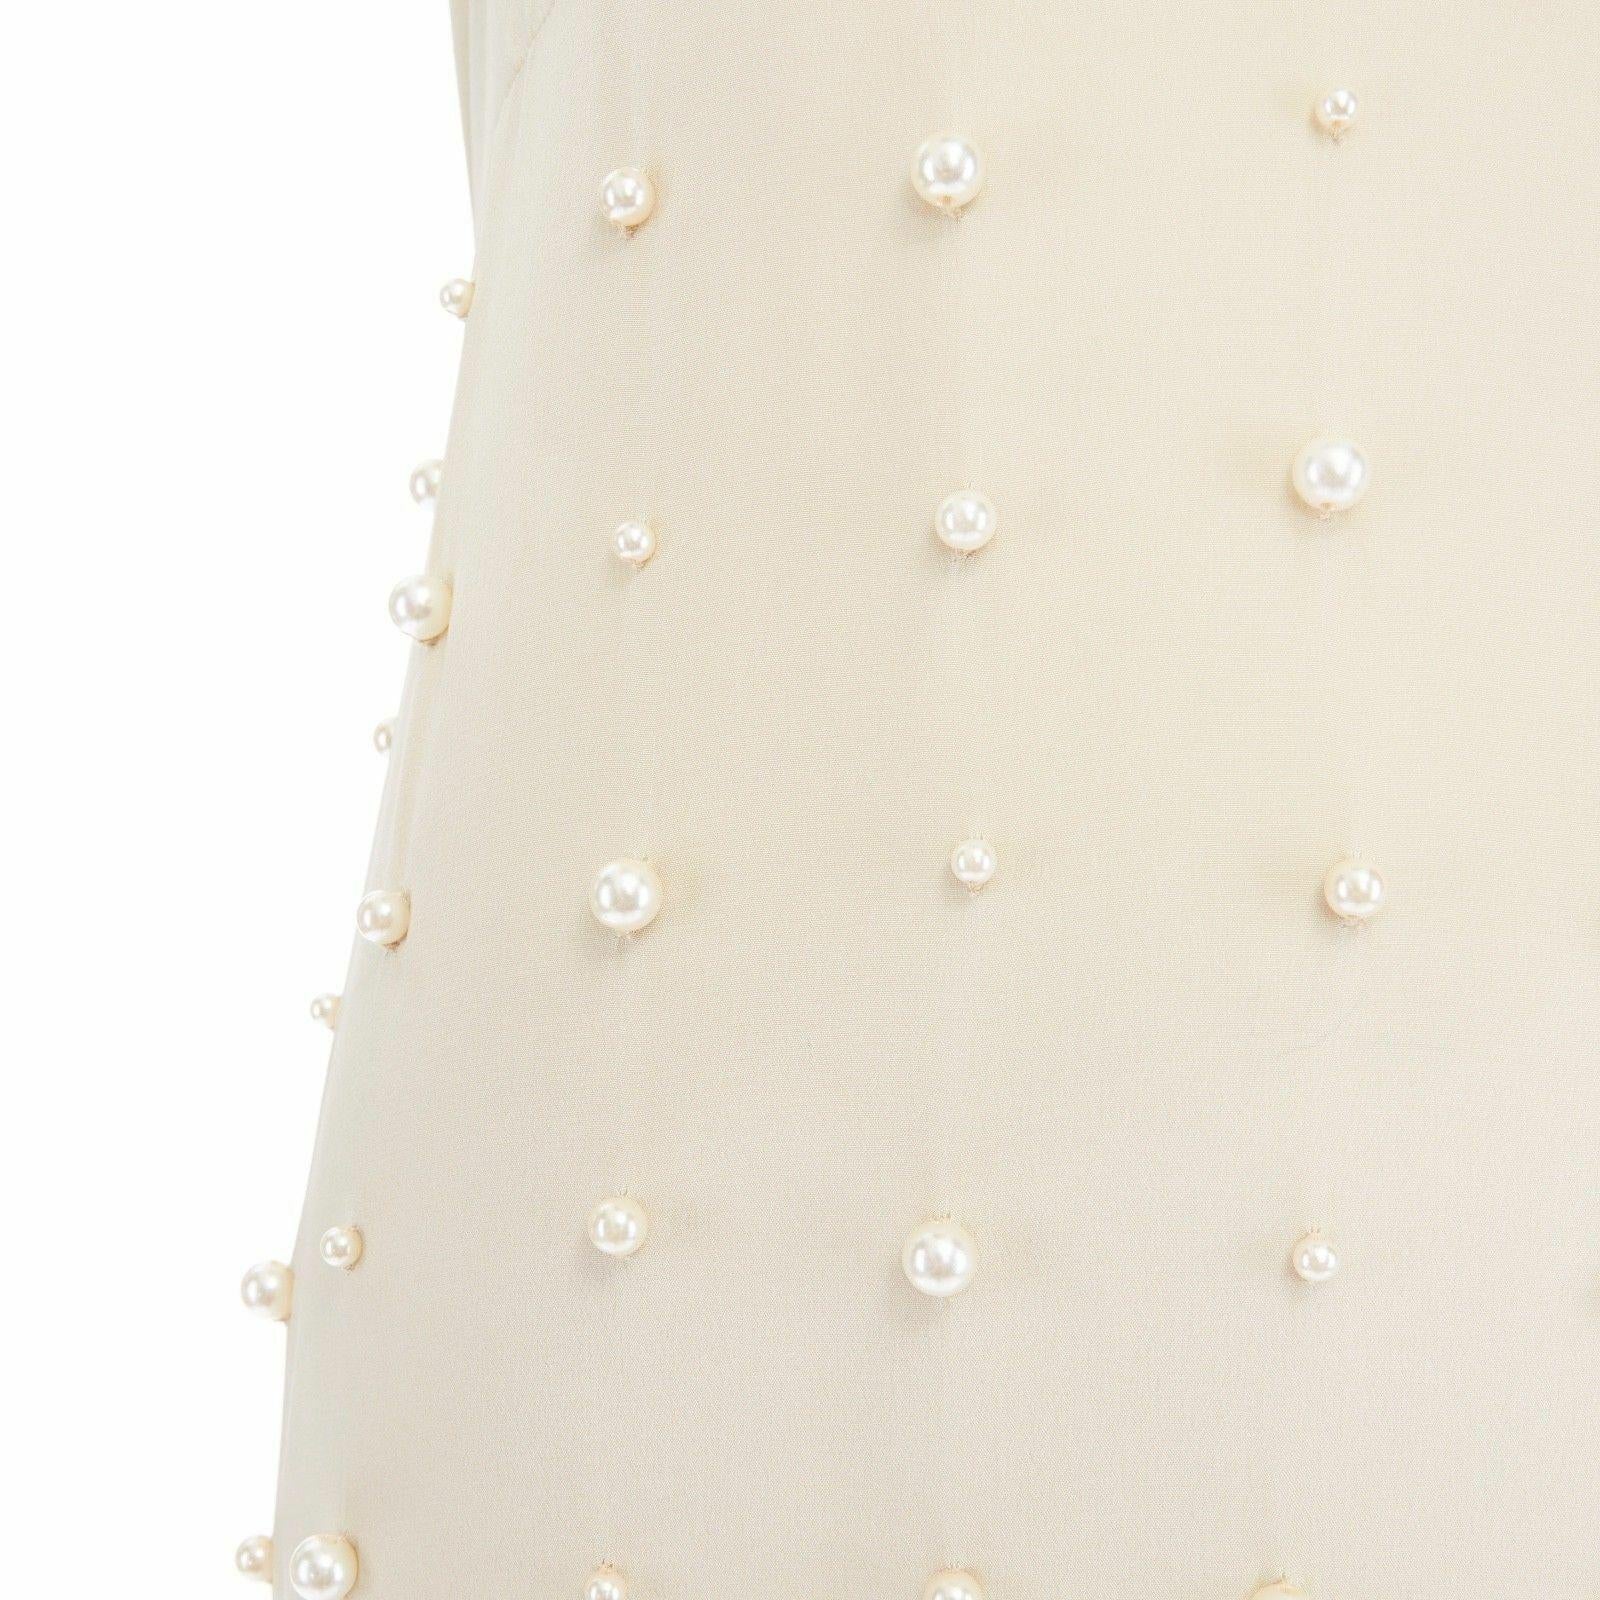 new DRIES VAN NOTEN AW16 Deming beige pearl embellished slip gown dress FR36 S 1